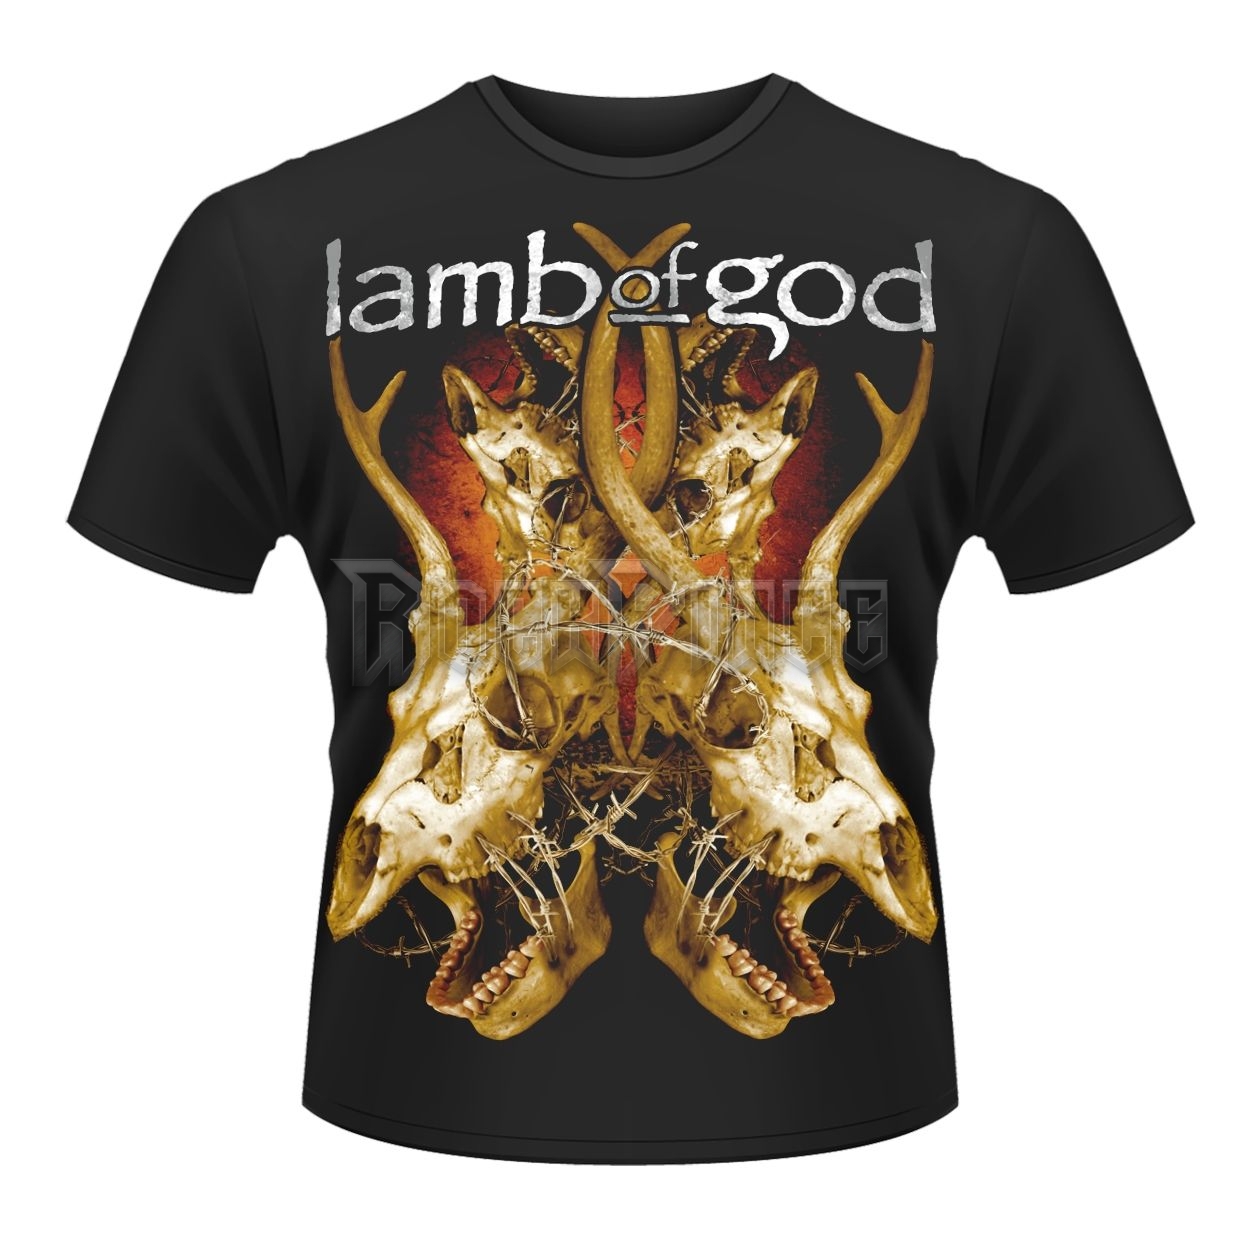 LAMB OF GOD - TANGLED BONES - PH8198